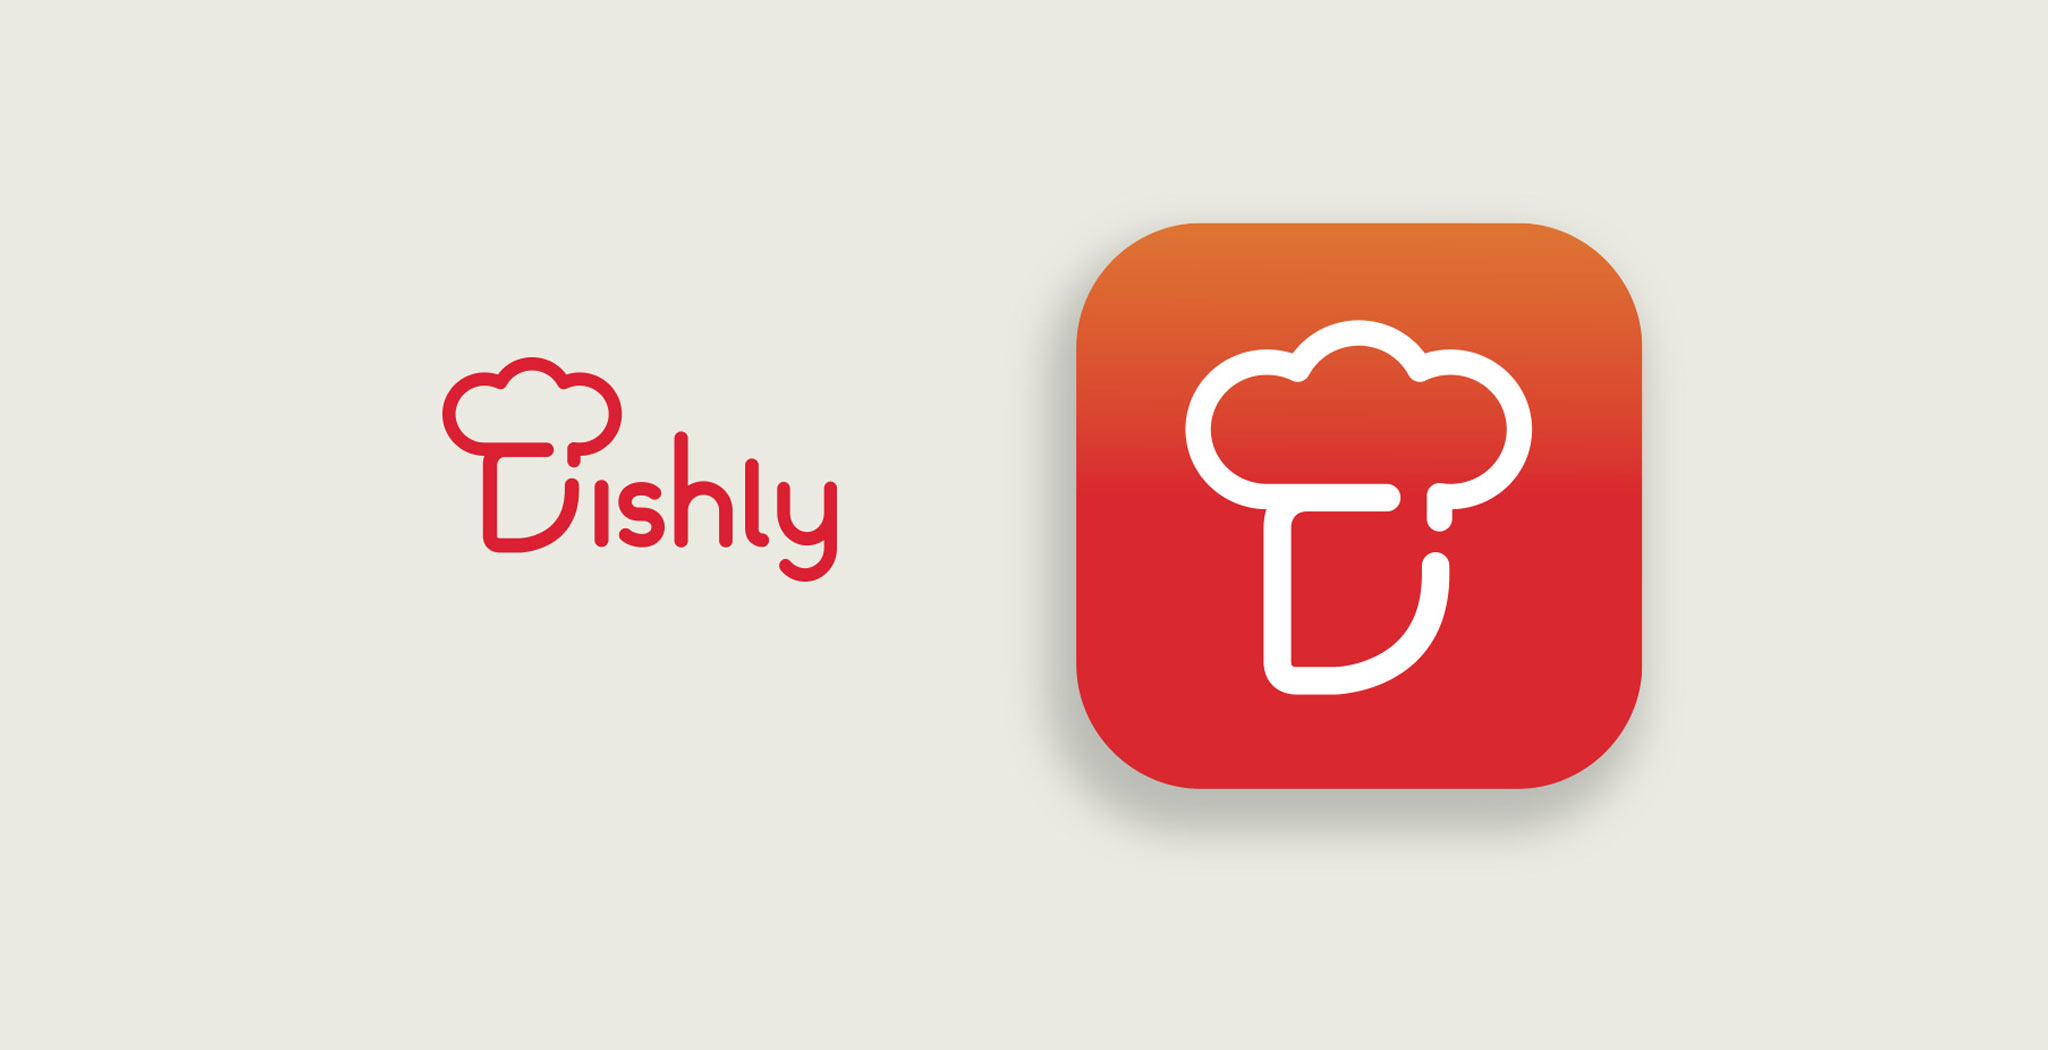 Dishly logo for design portfolio